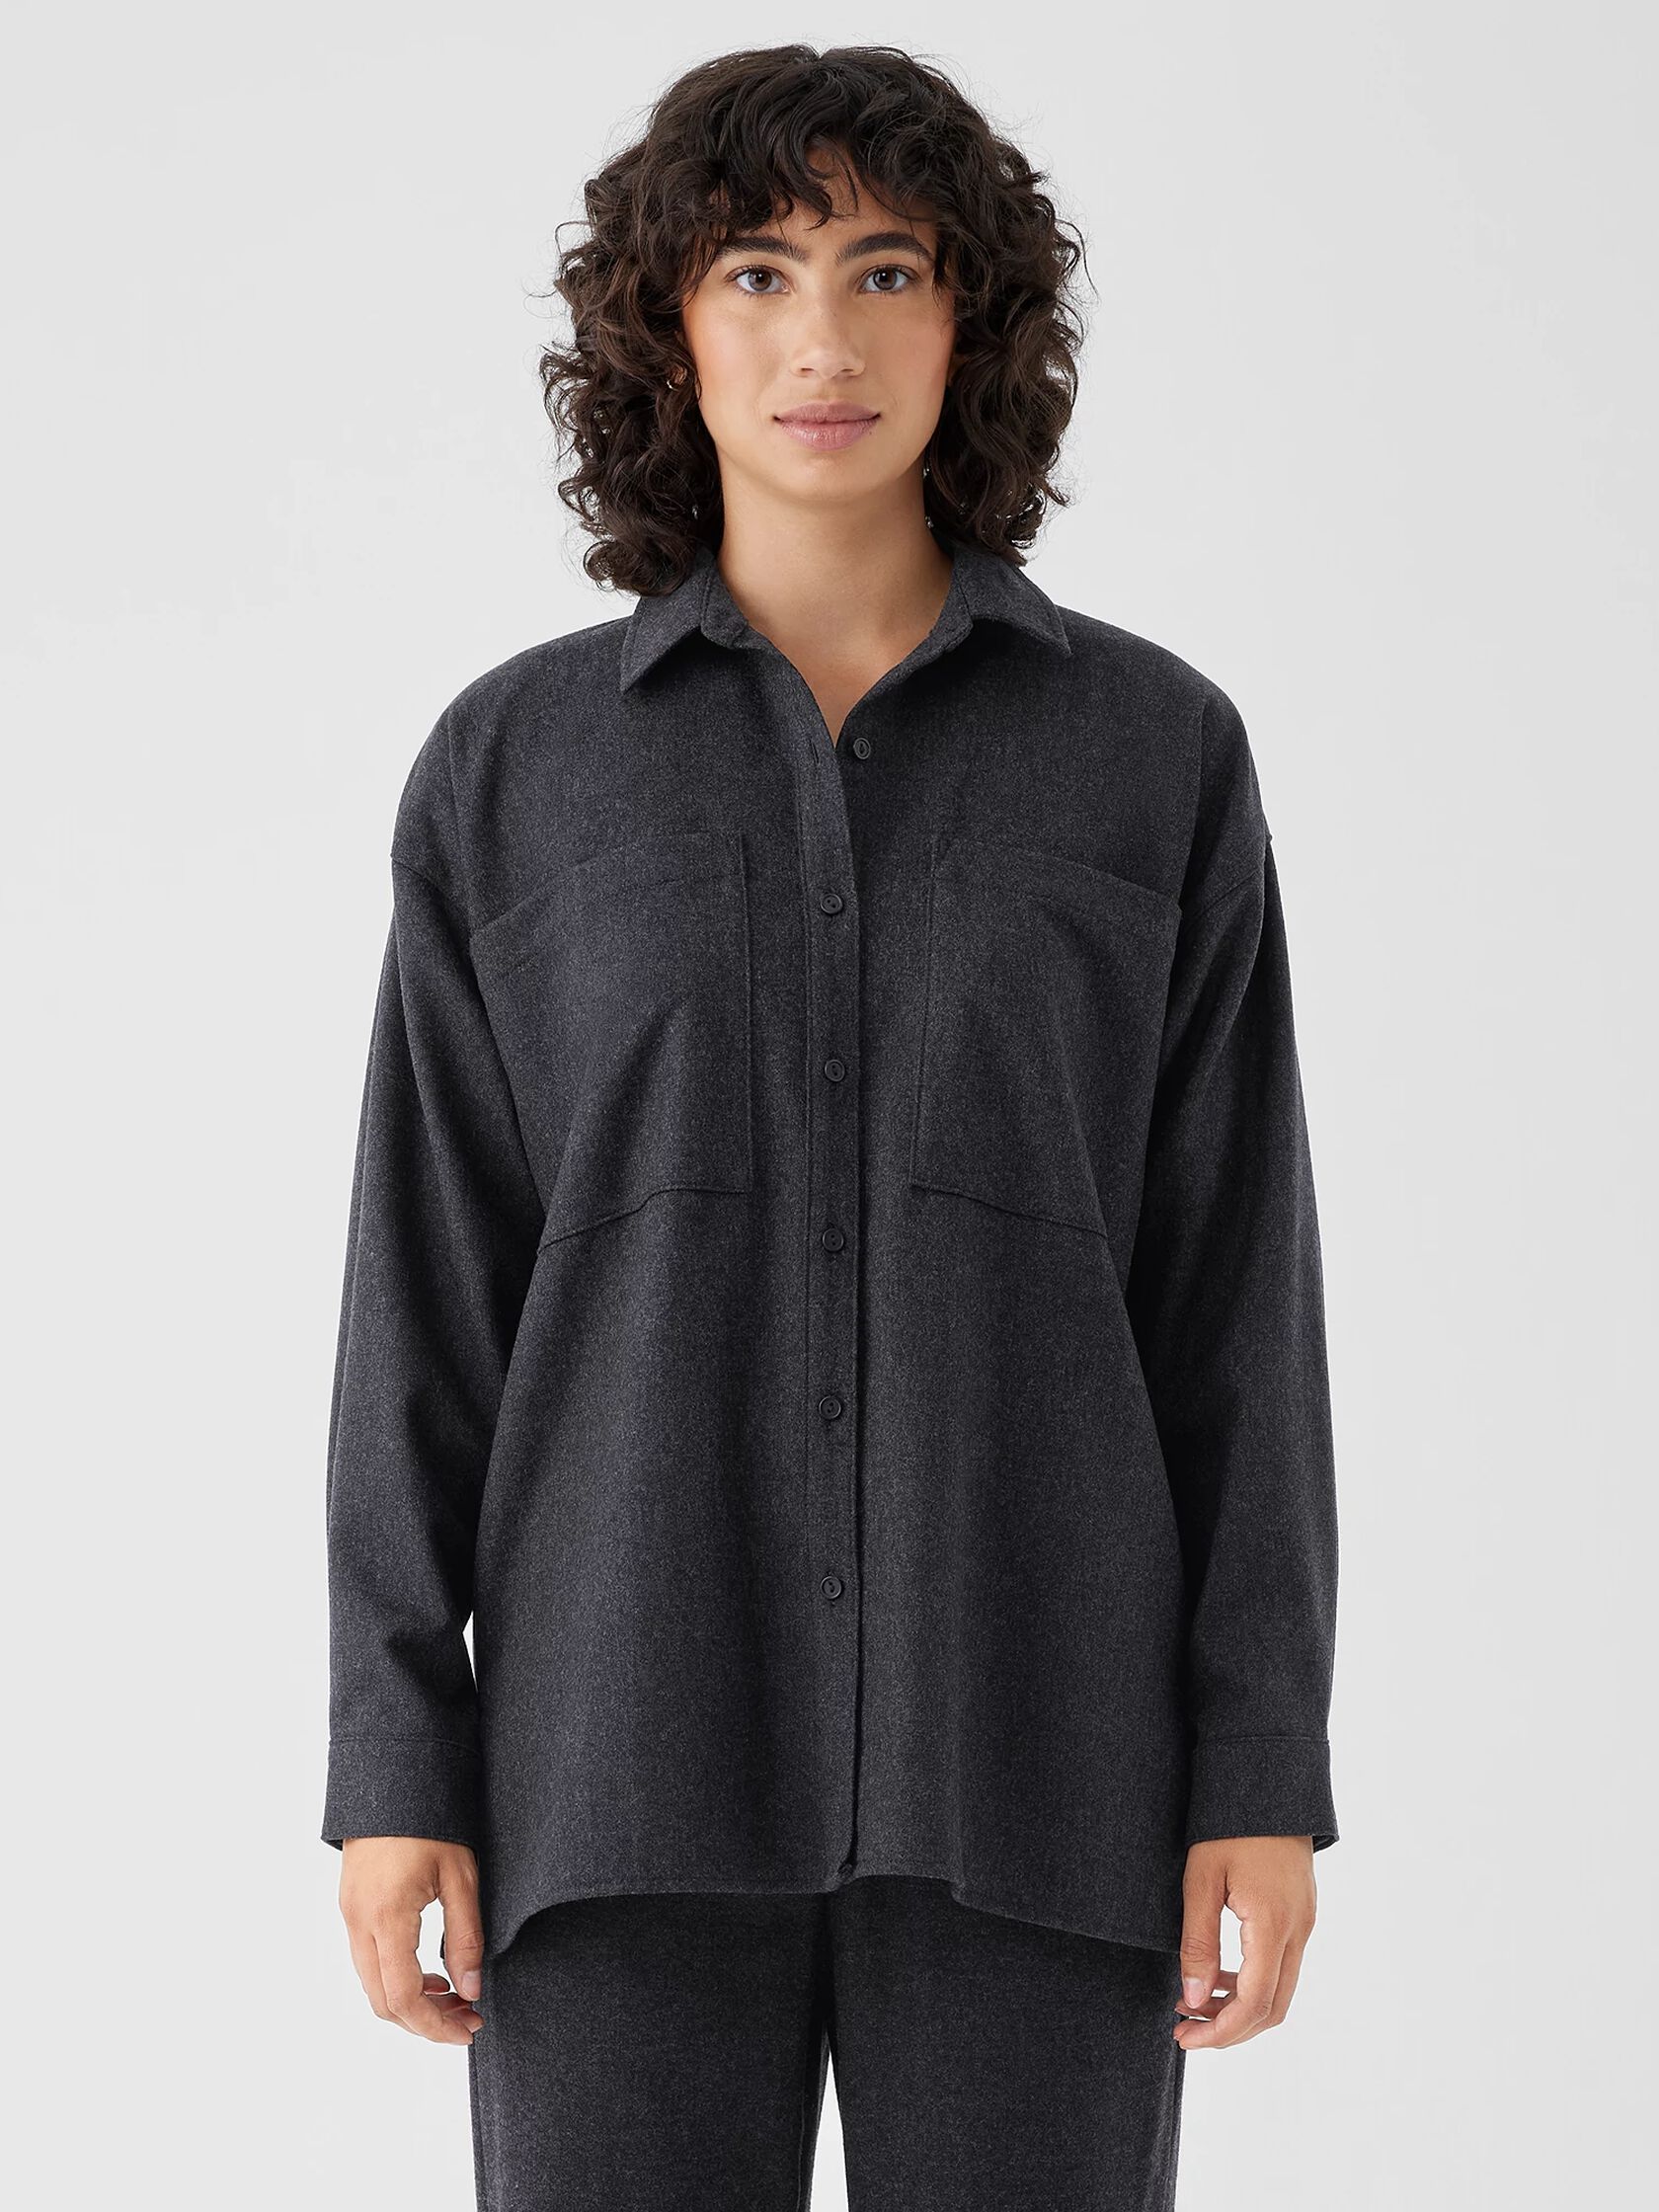 Soft Wool Flannel Classic Collar Shirt